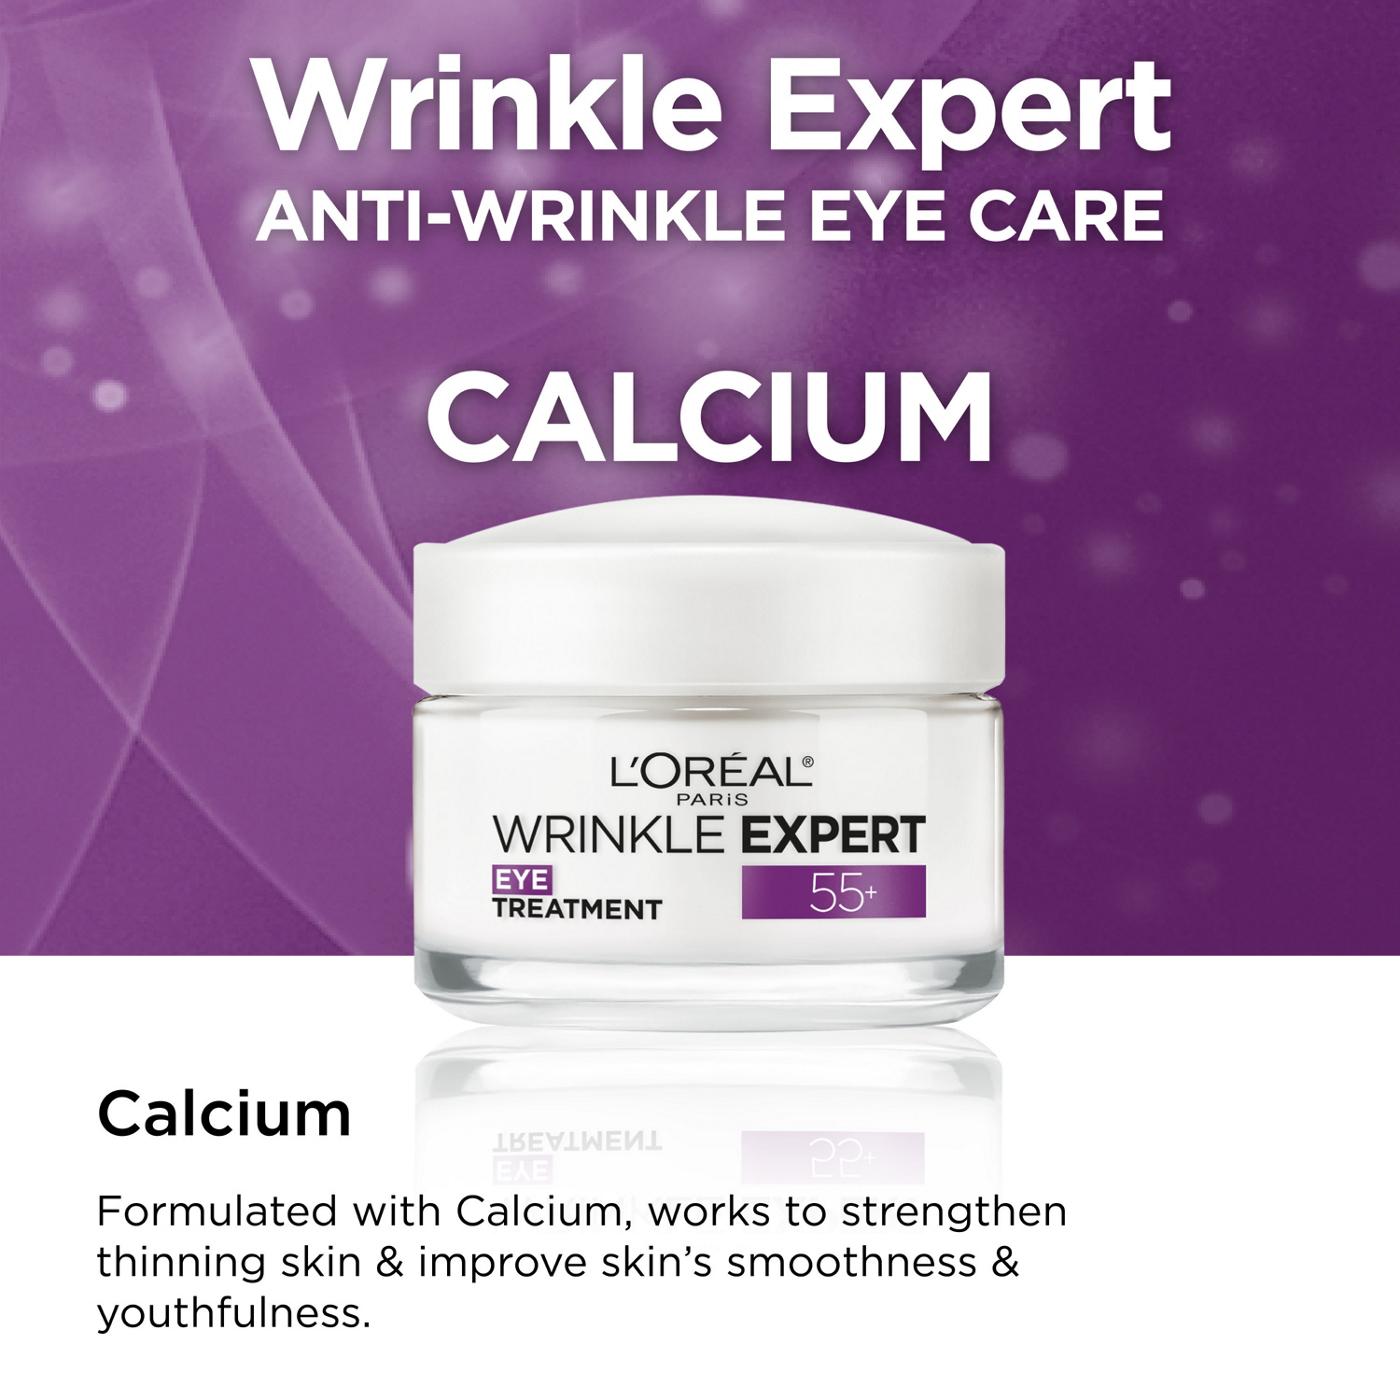 L'Oréal Paris Wrinkle Expert 55+ Anti-Wrinkle Eye Treatment; image 2 of 2